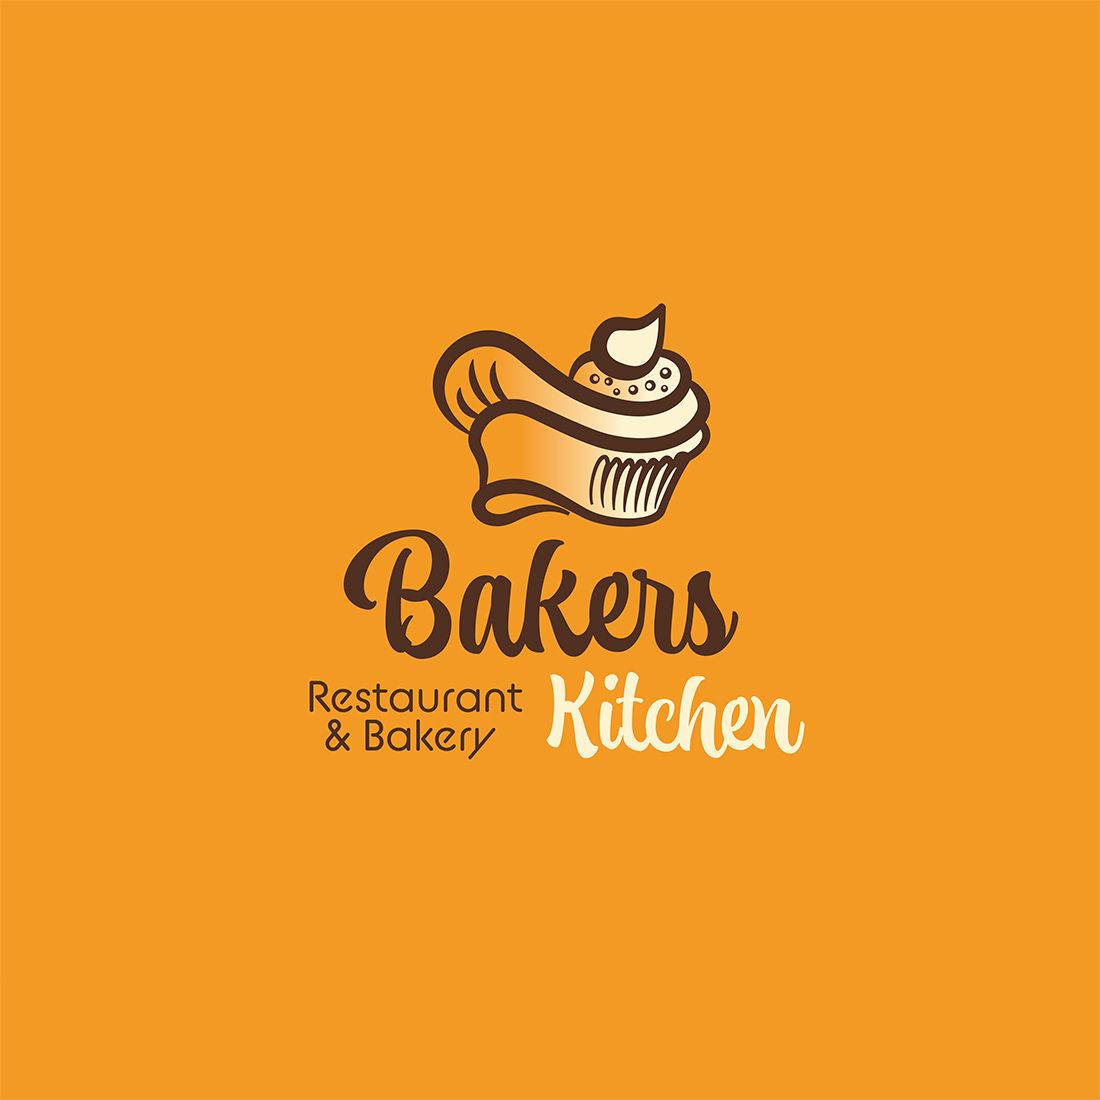 Bakers Kitchen Logo with orange background.